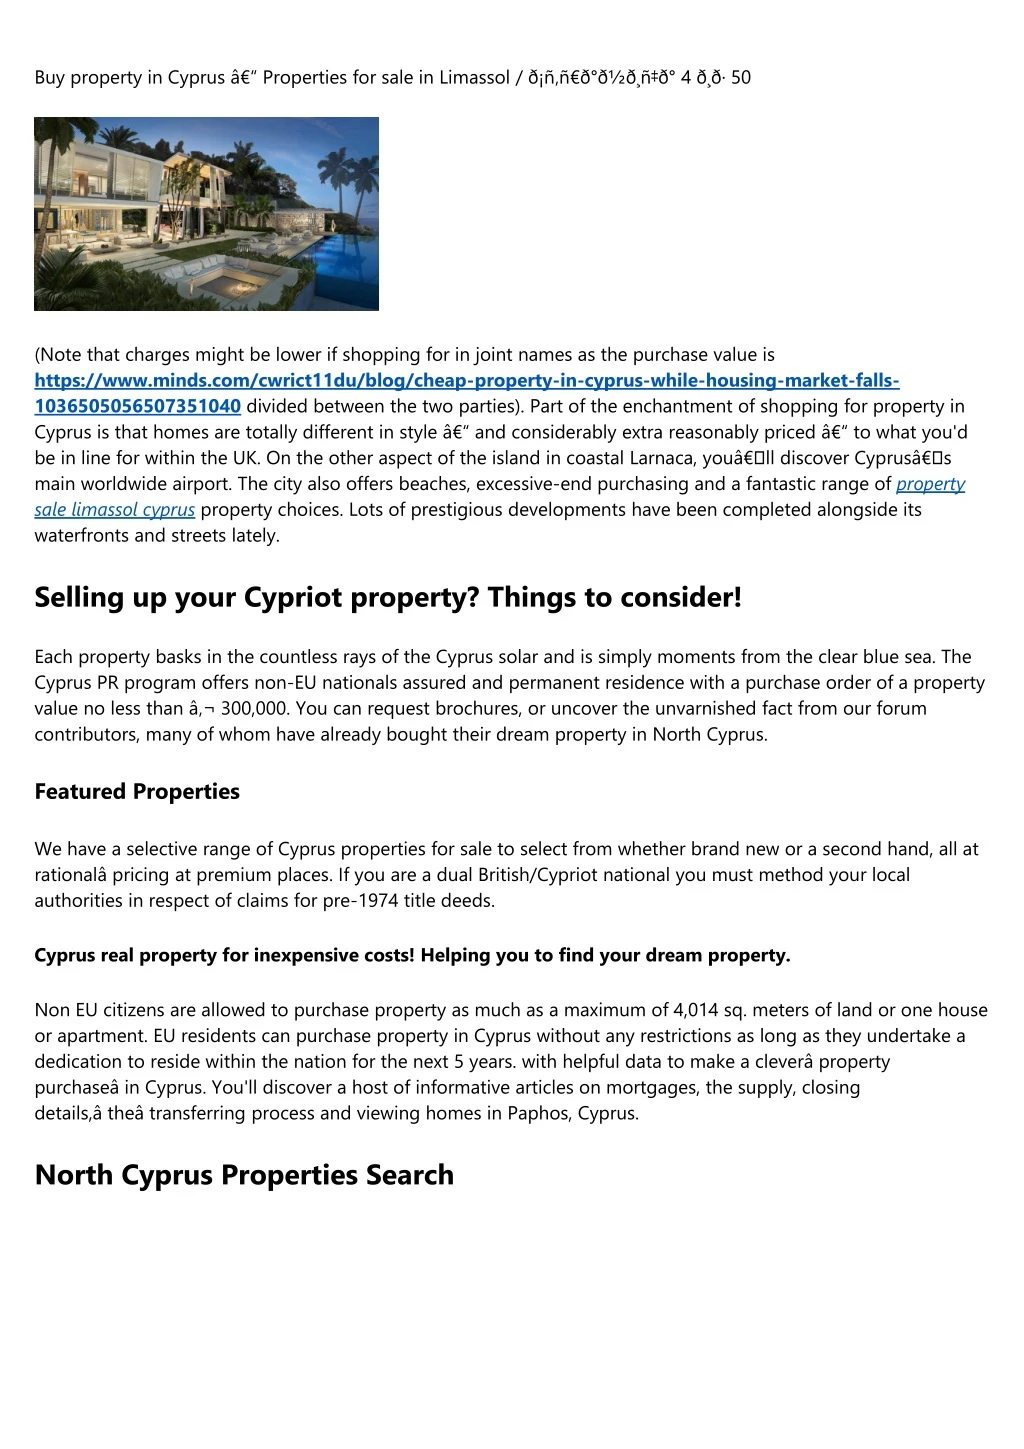 buy property in cyprus properties for sale